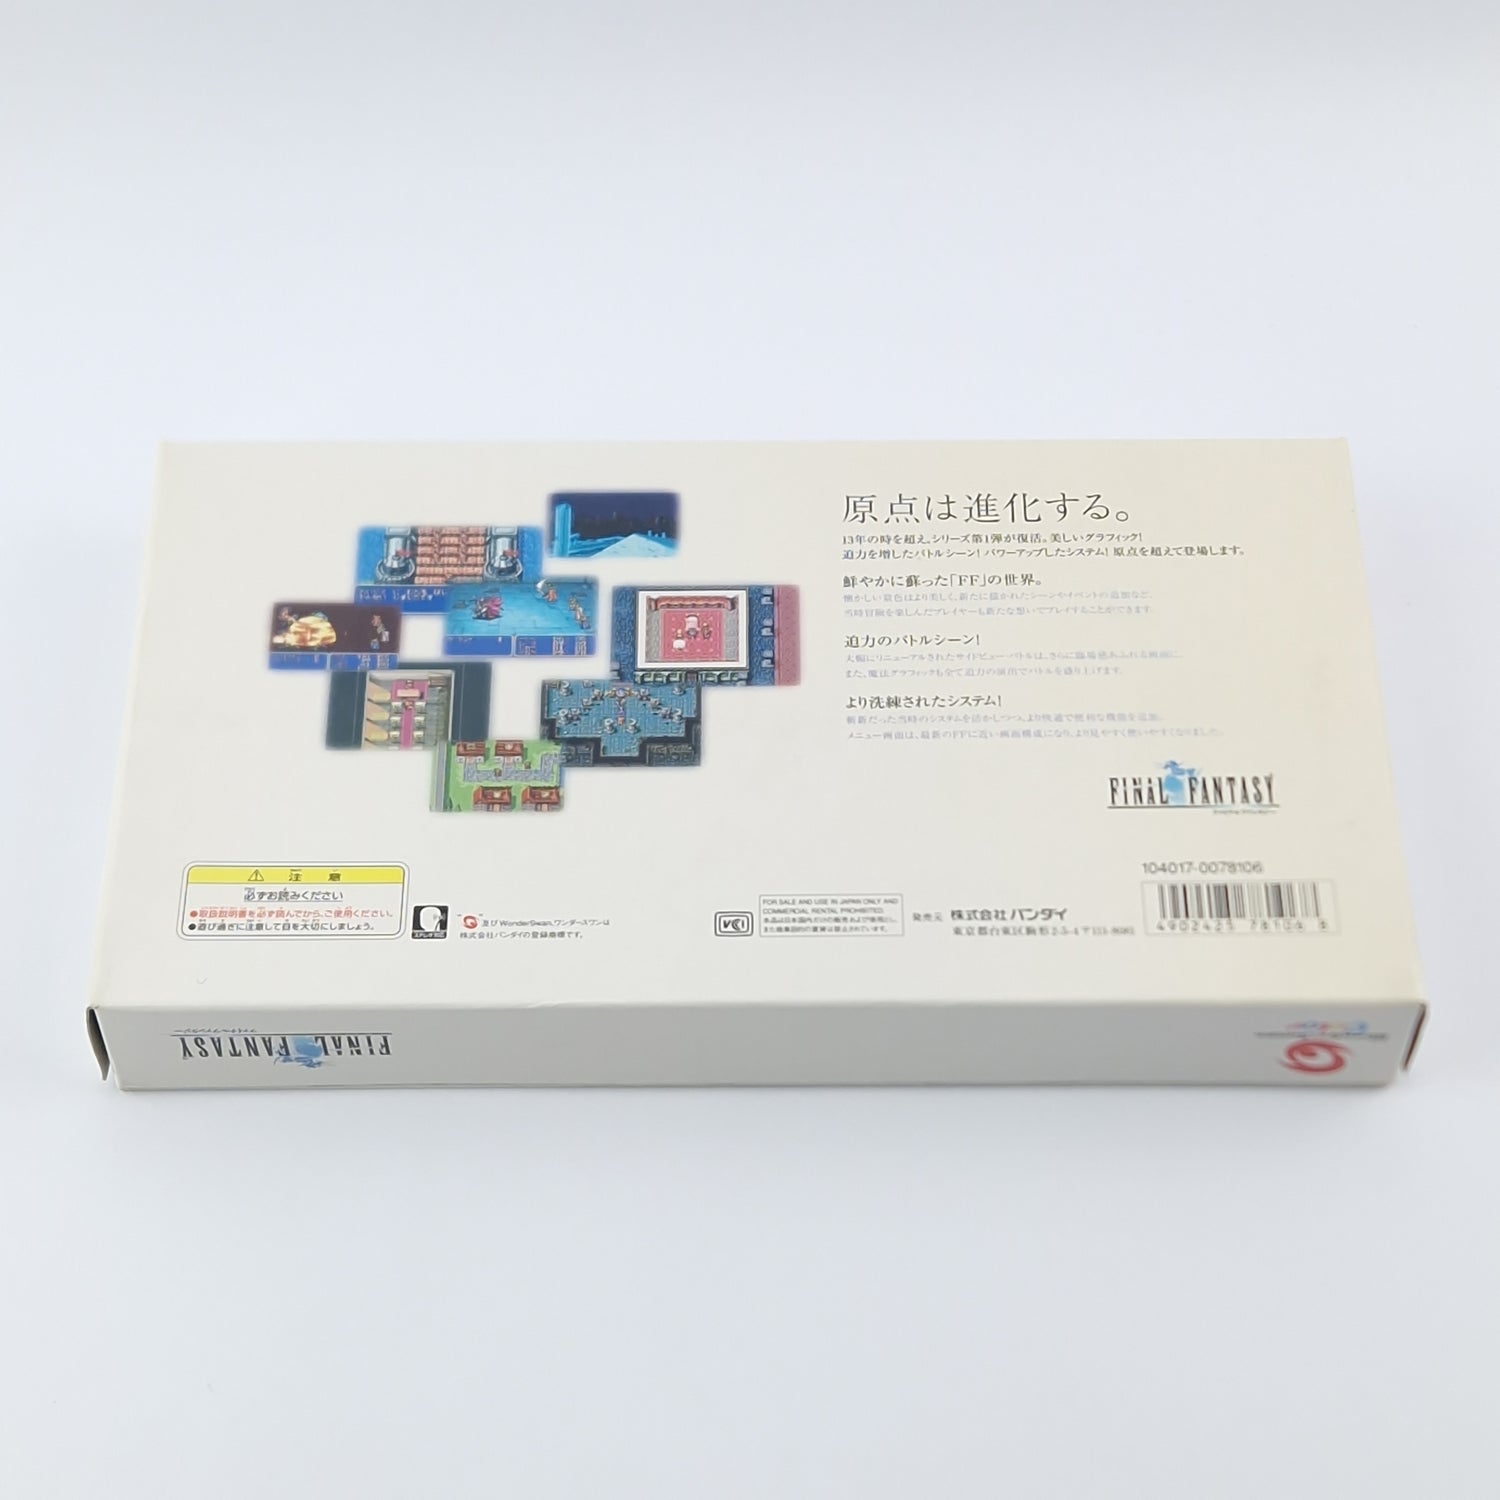 Bandai Wonderswan Color Konsole : Final Fantasy Limited Edition - OVP JAPAN